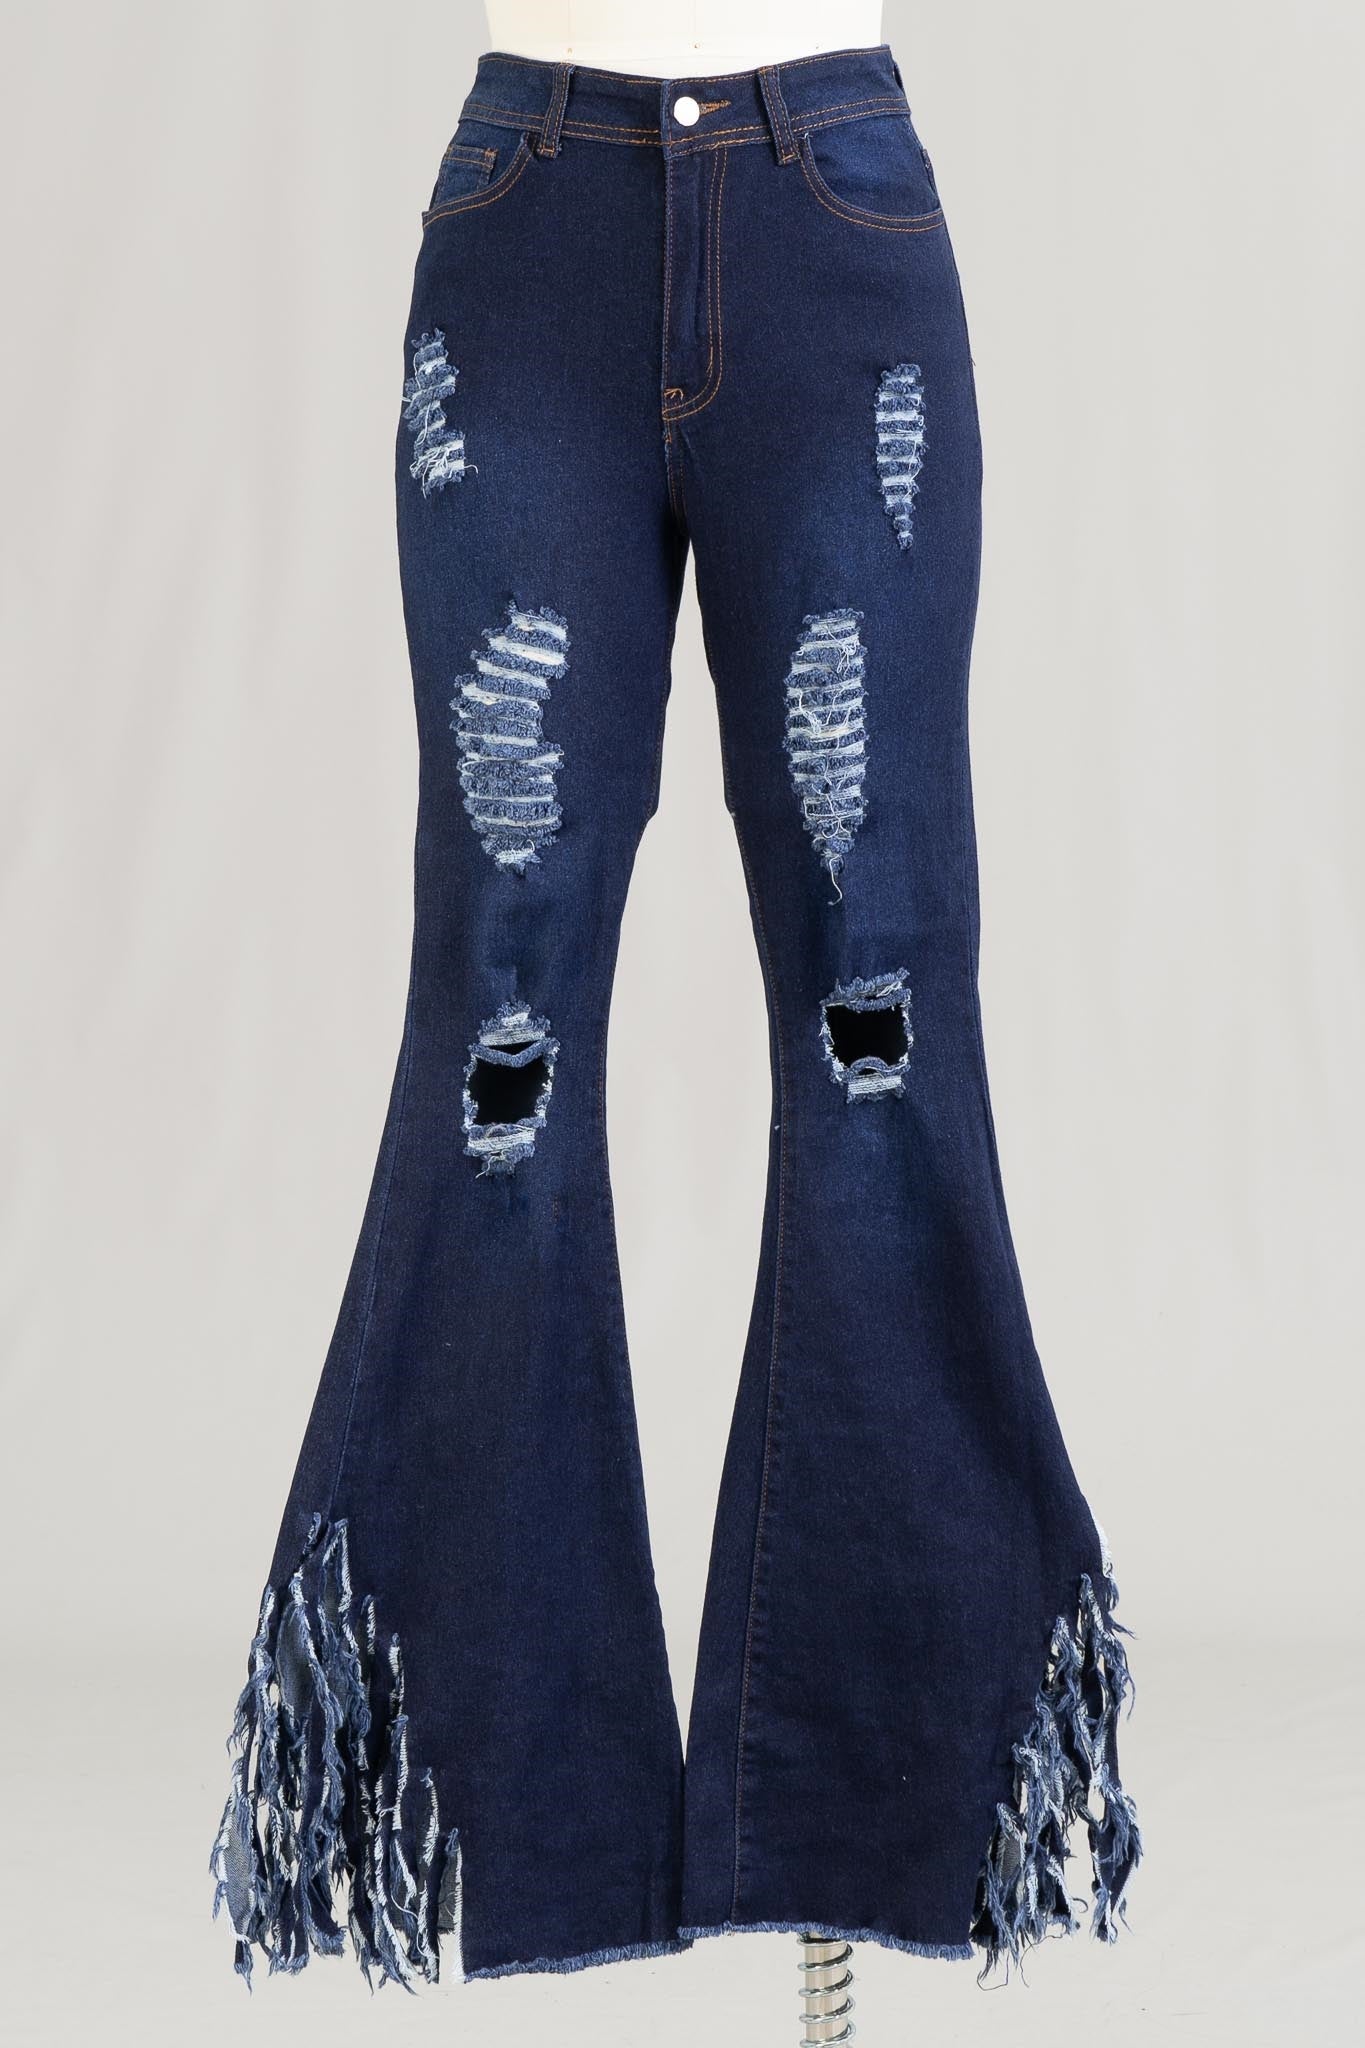 Denim Distressed Flare Jeans